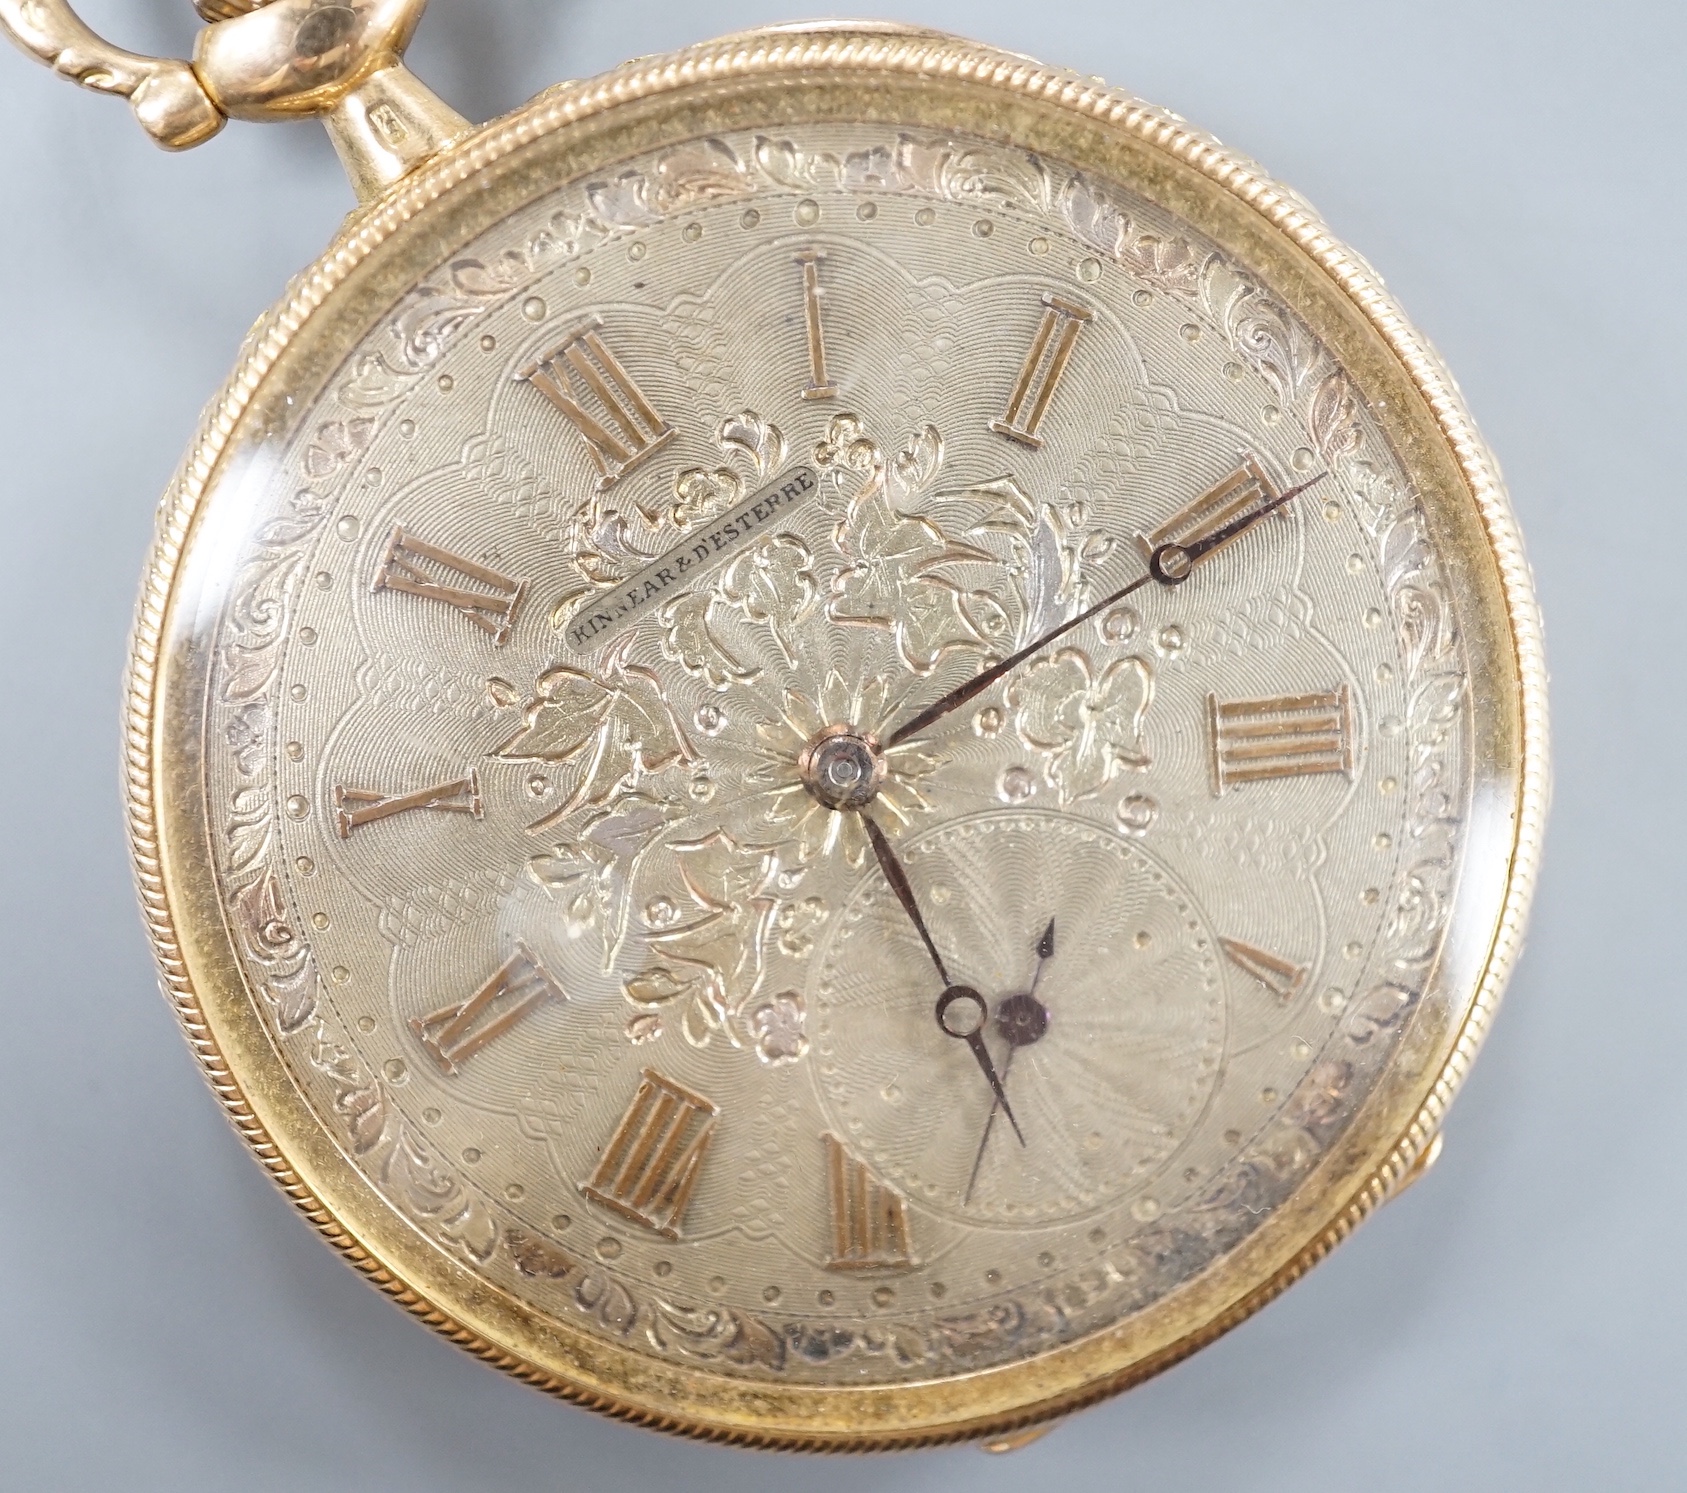 An early 20th century Swiss yellow metal open faced keyless dress pocket watch, retailed by Kinnear & D'Esterre, case diameter 44mm, gross 52 grams.